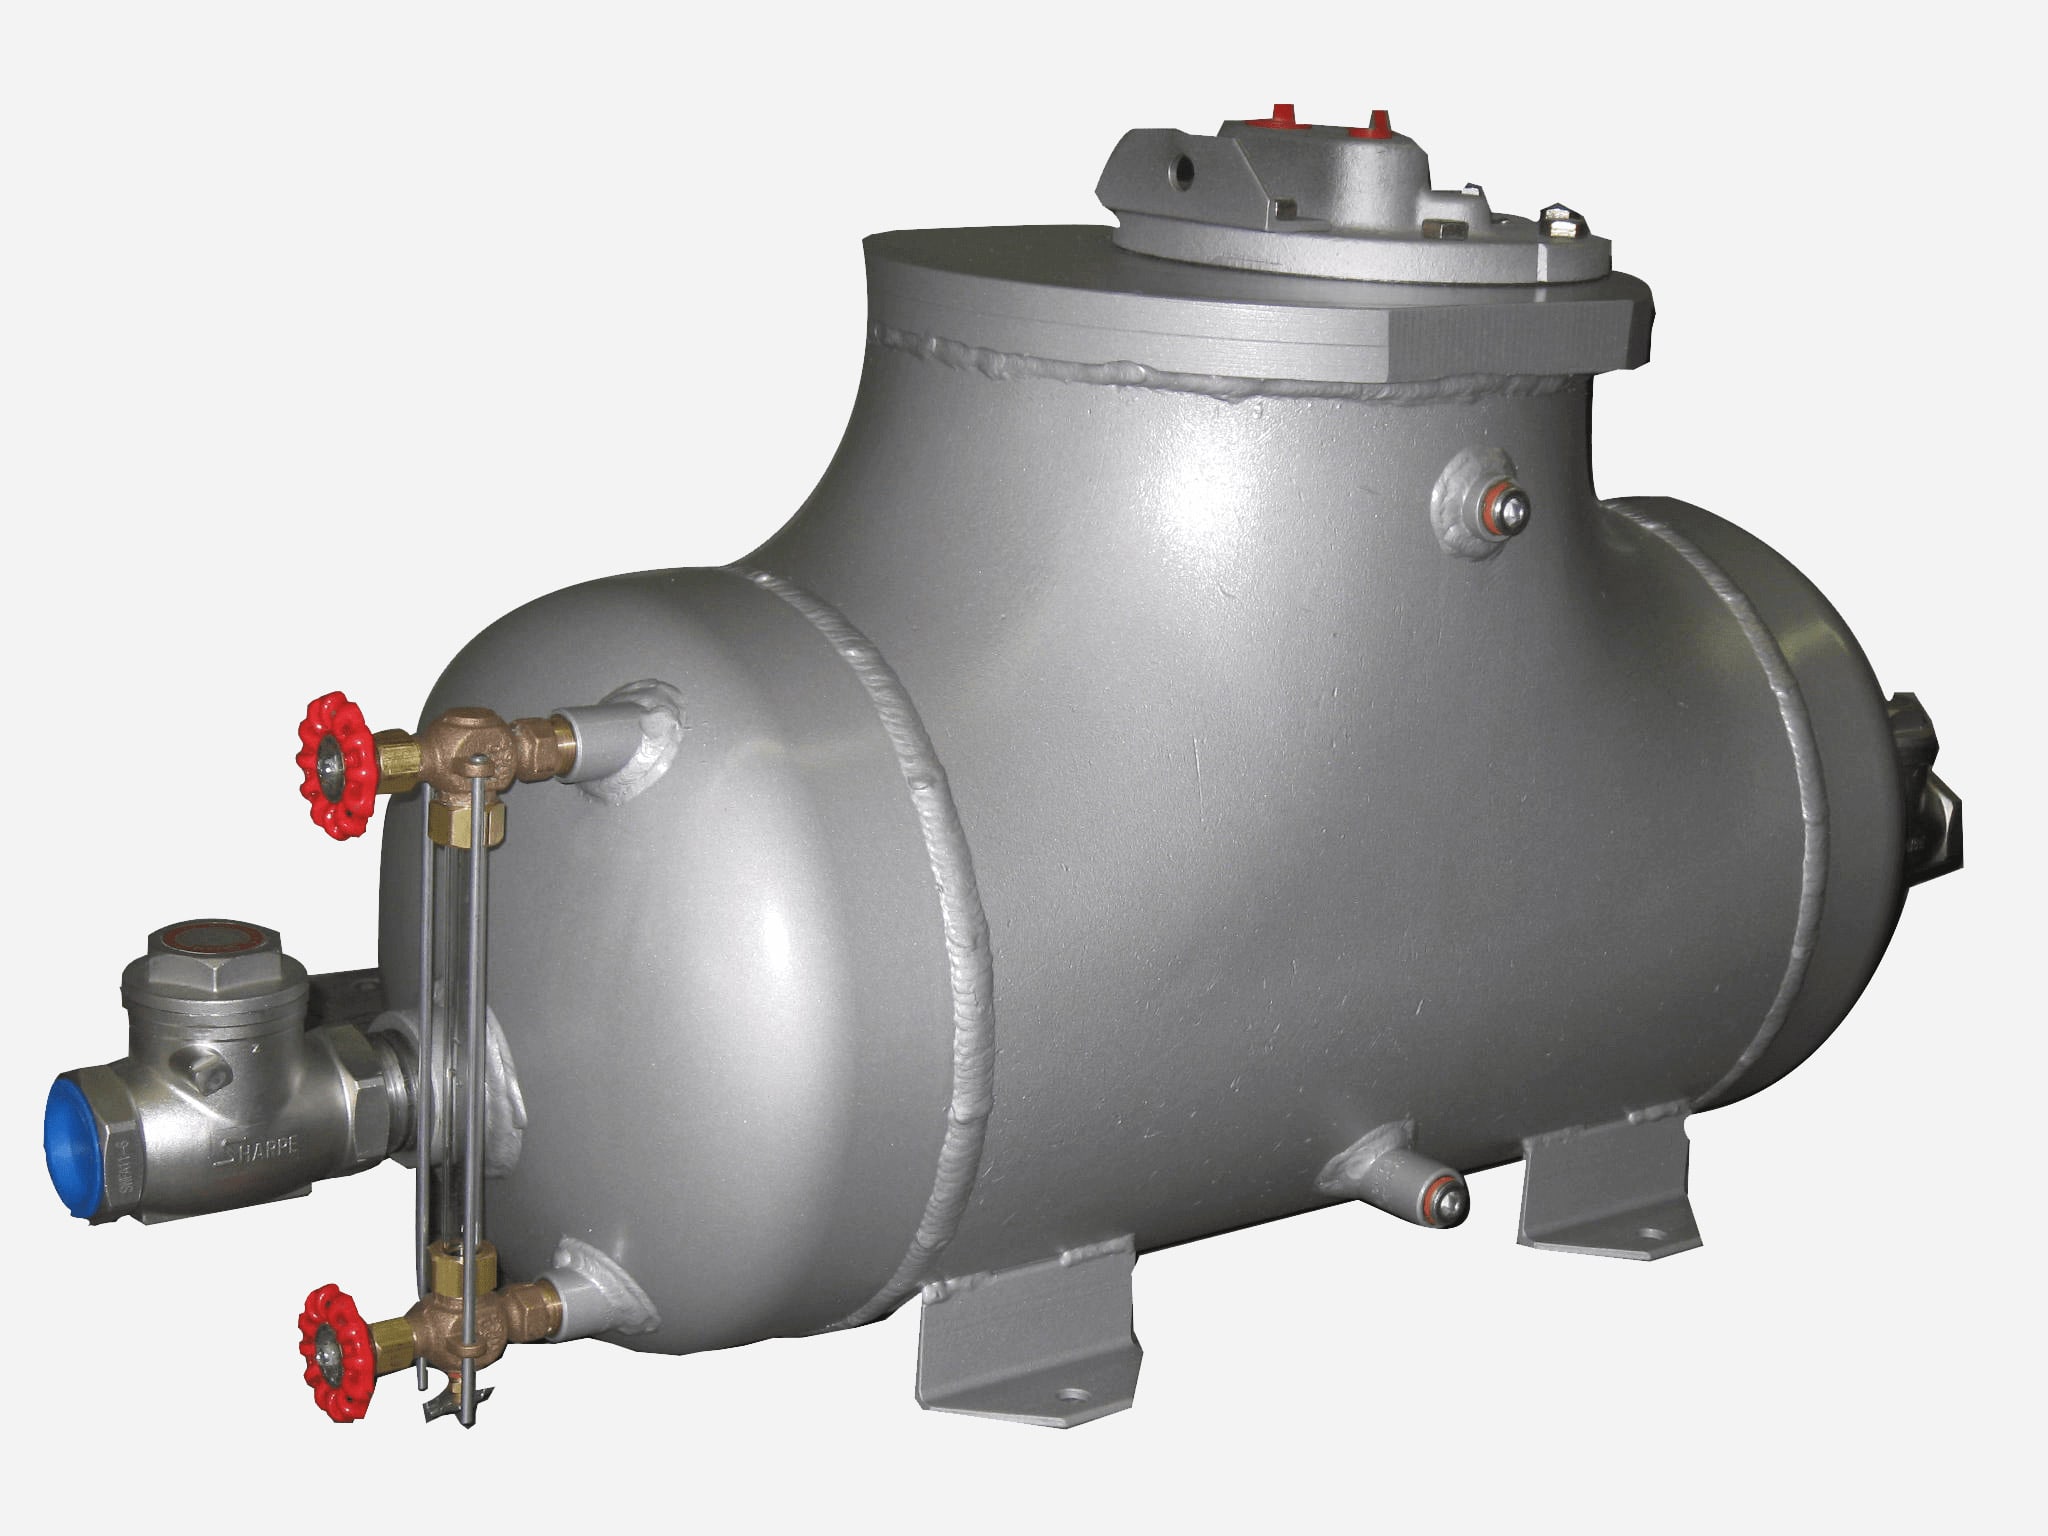 Pressure powered (sub) condensate pump